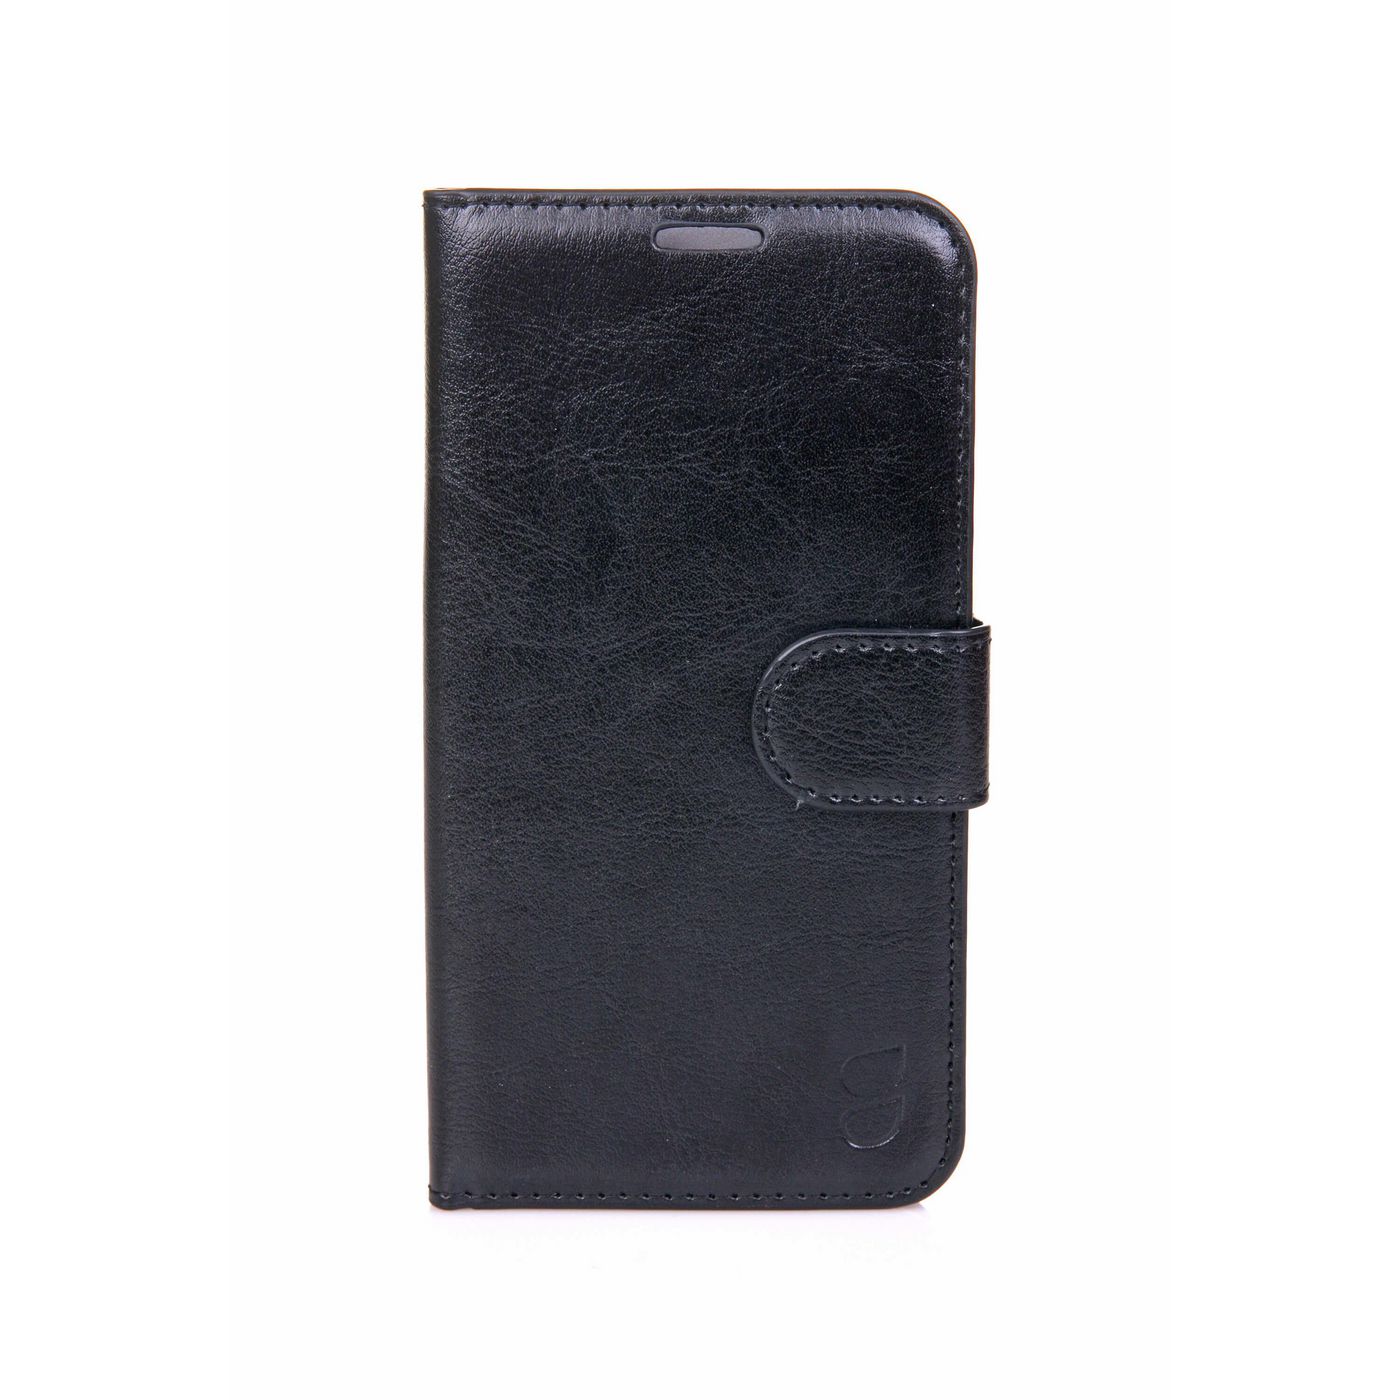 Gear 658007 Samsung S6 Exclusive Wallet bl 